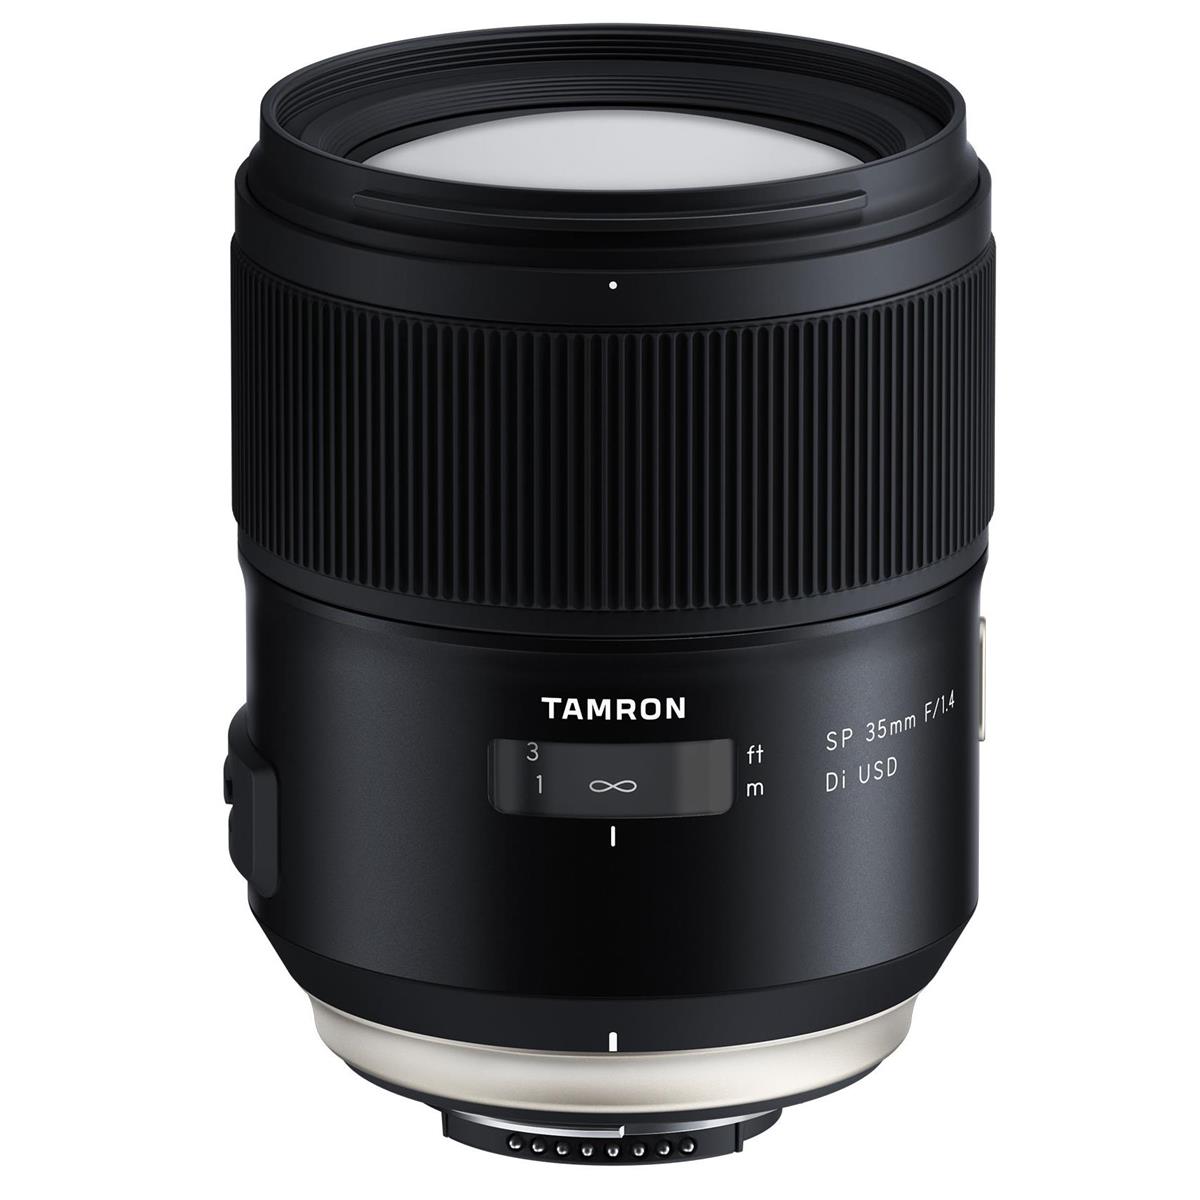 Image of Tamron SP 35mm f/1.4 Di USD Lens for Nikon F